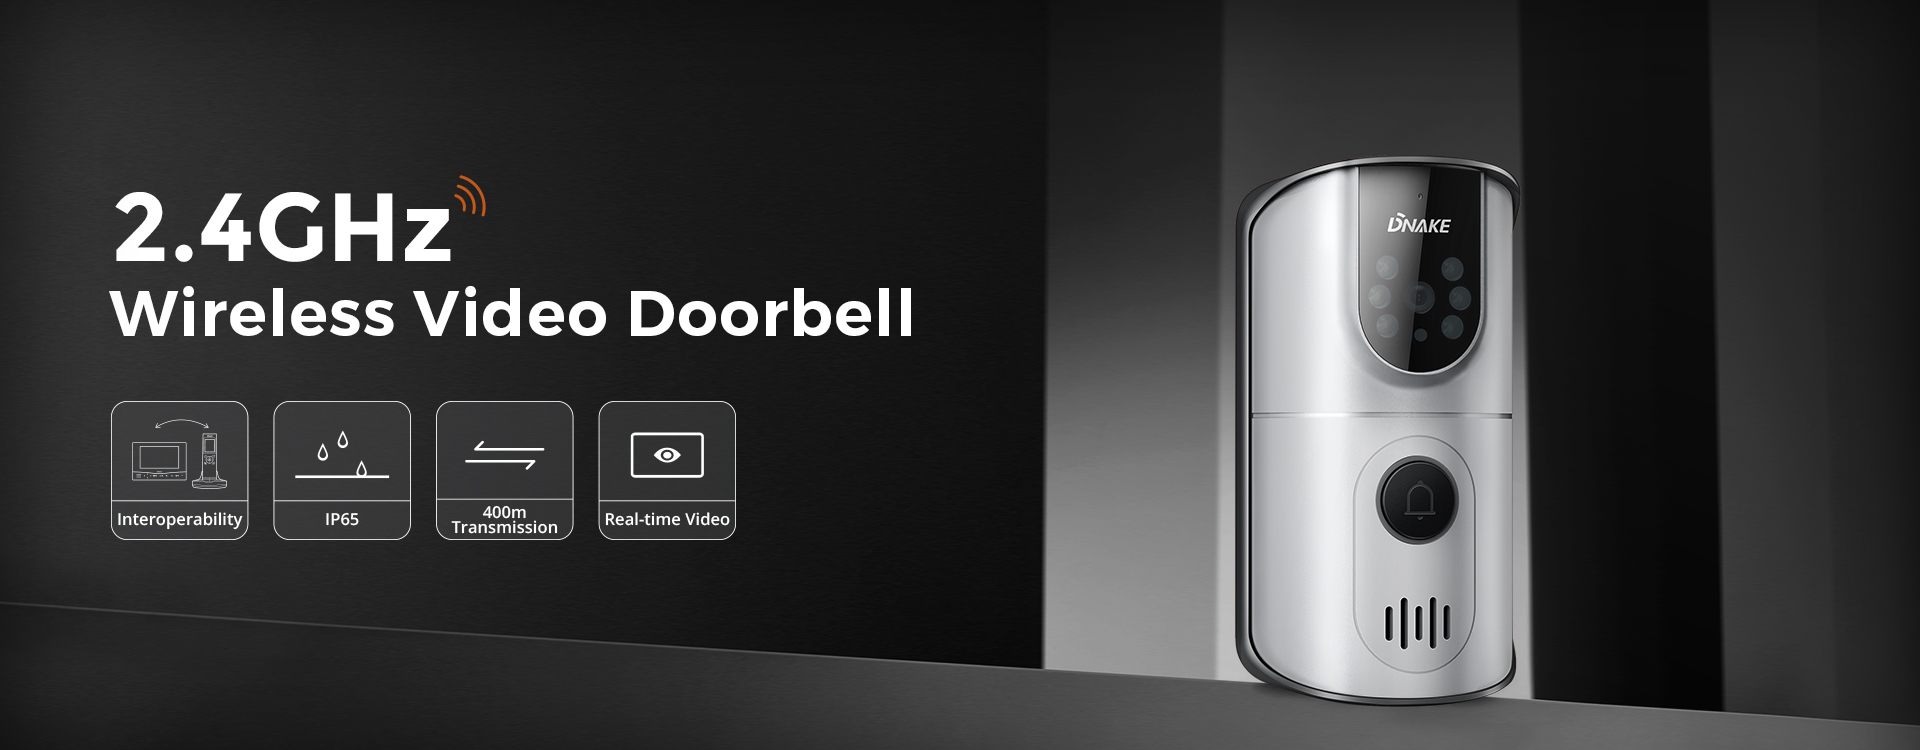 221101-1102-Wireless-Doorbell-Banner-1920x750px